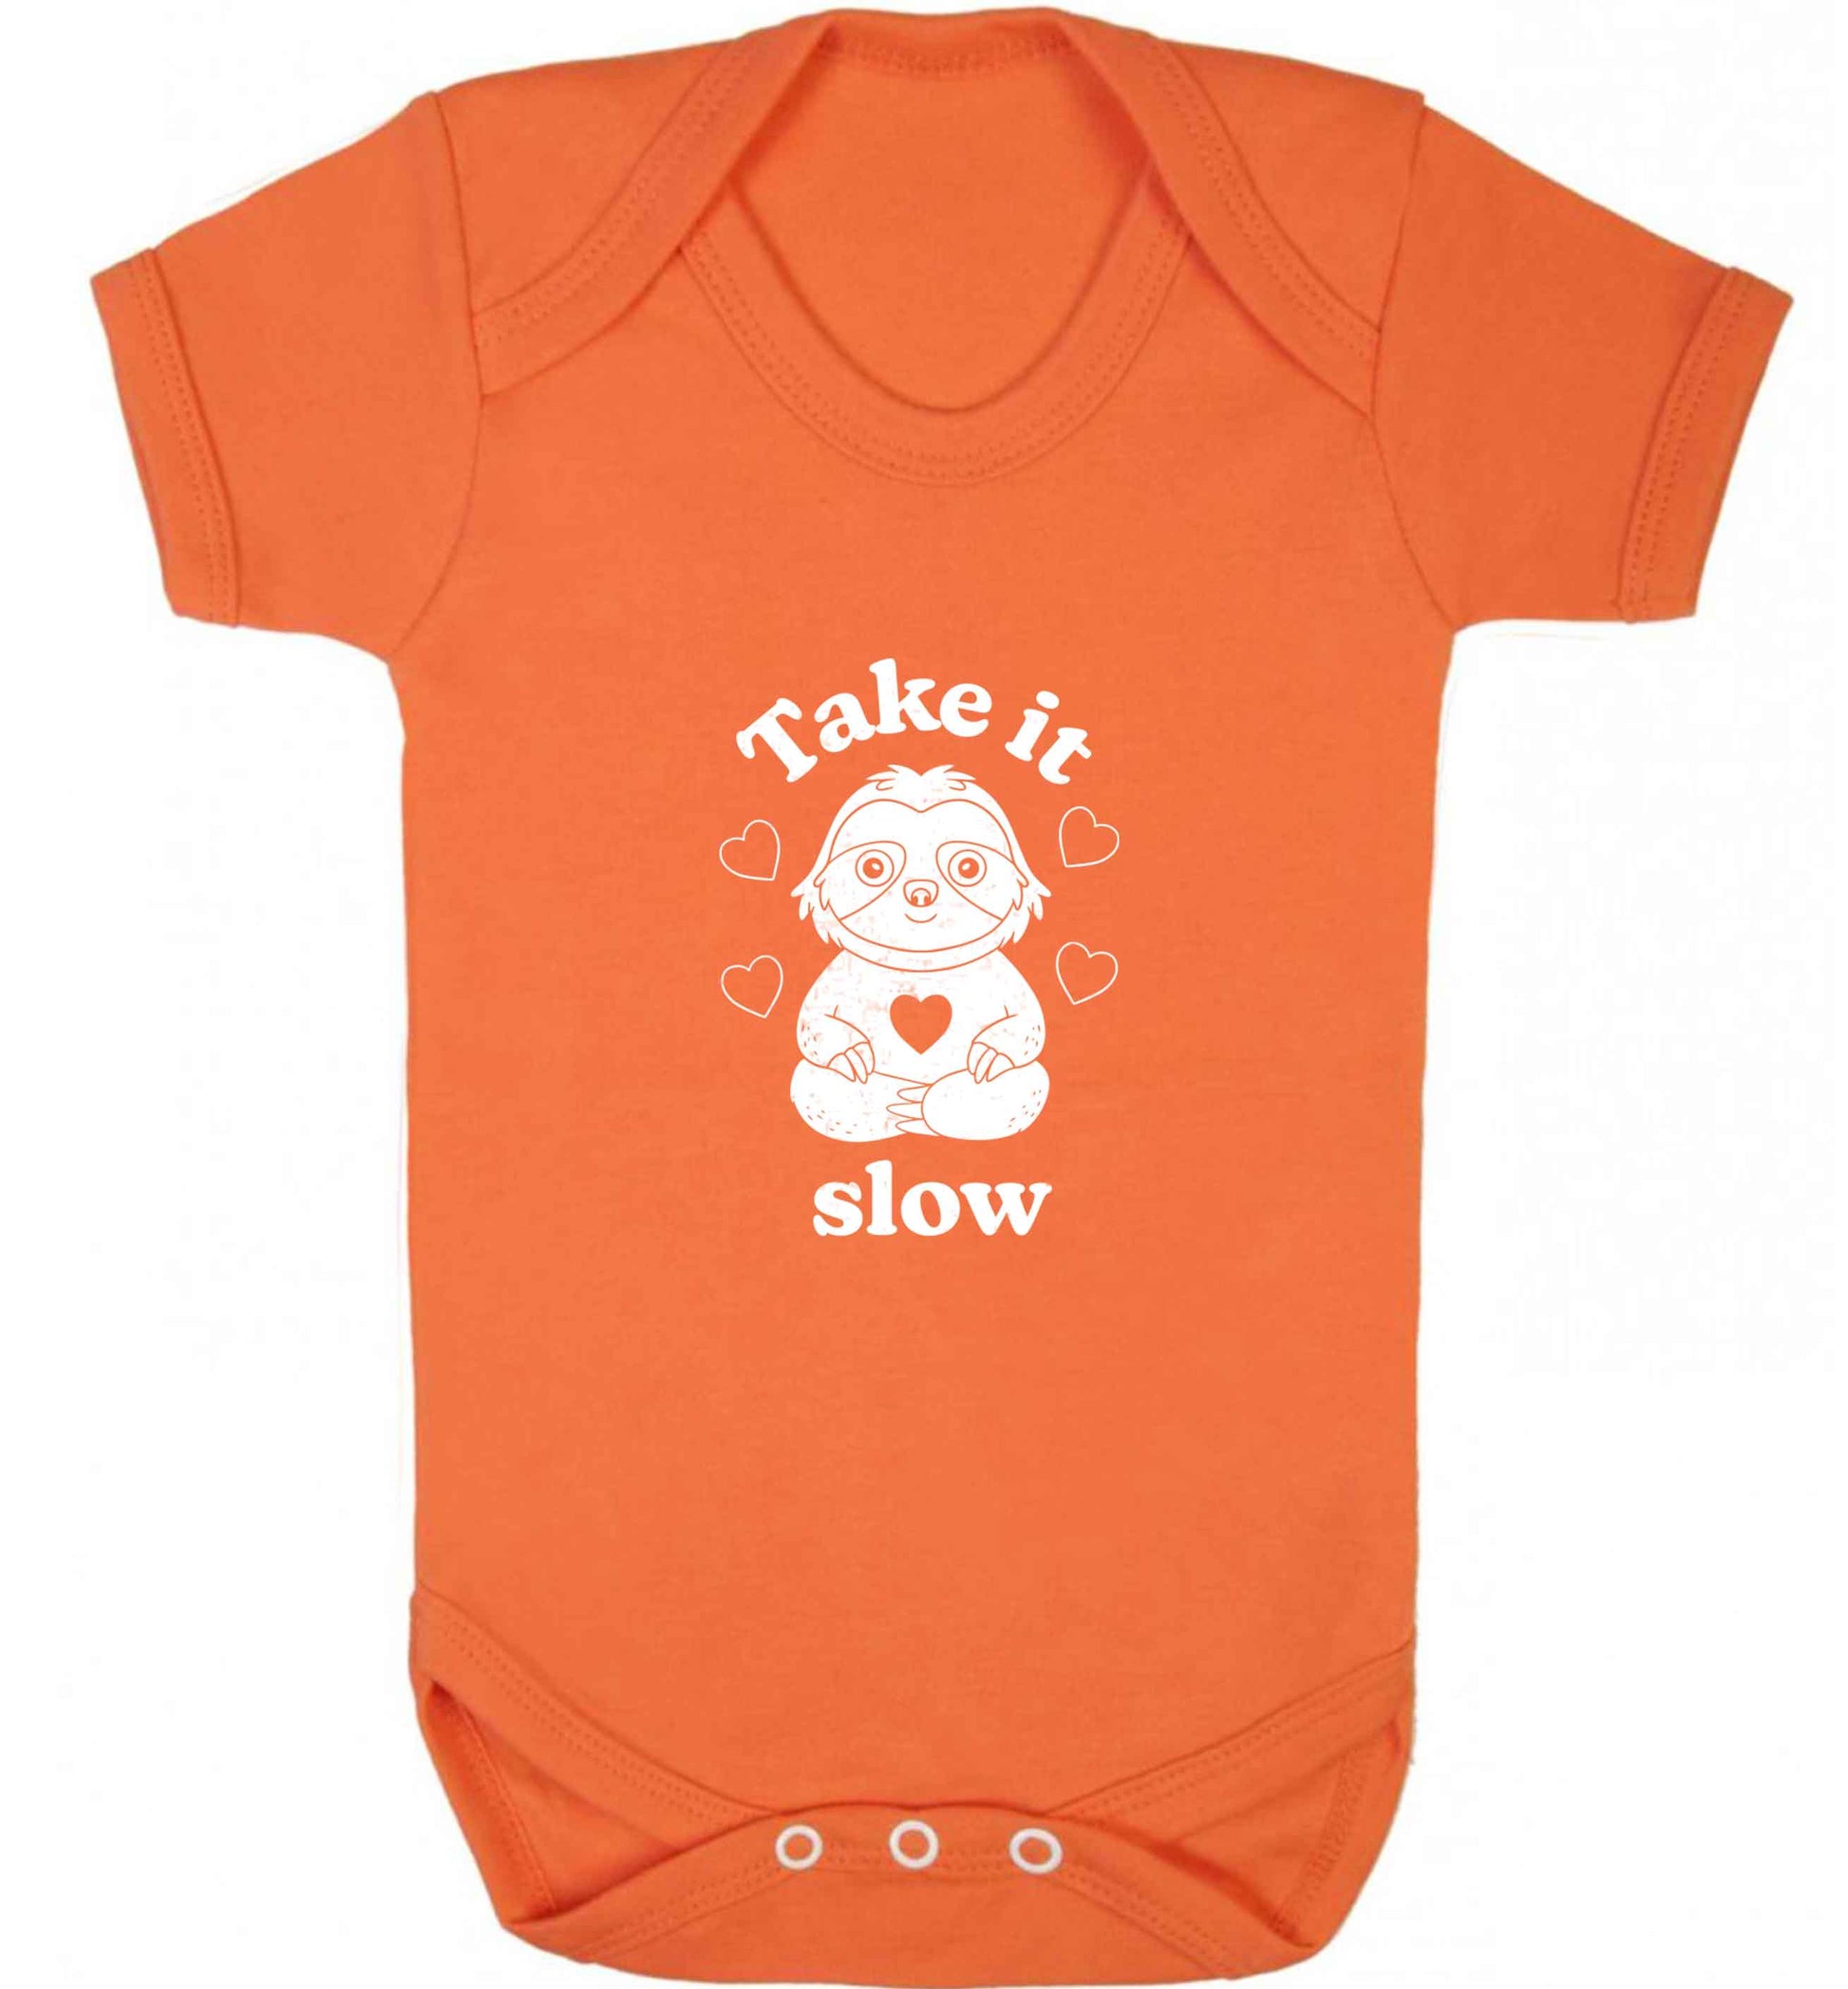 Take it slow baby vest orange 18-24 months